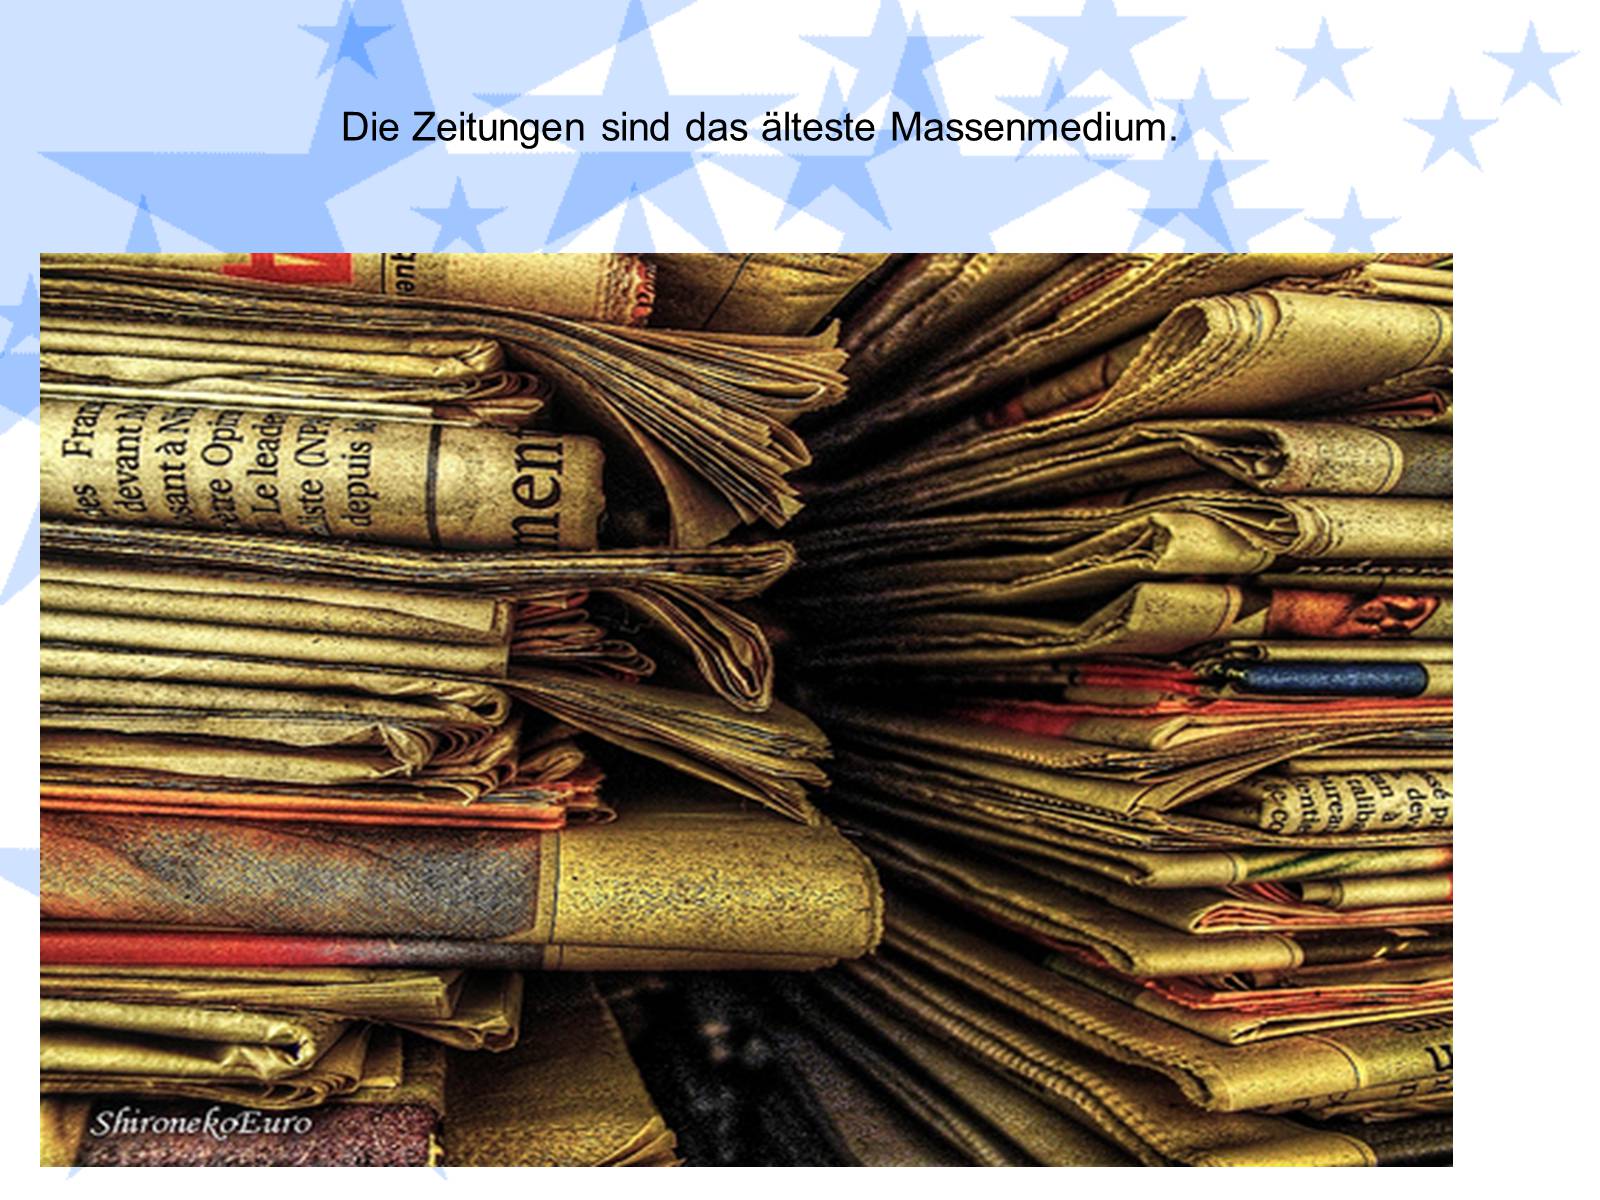 Презентація на тему «Zu den Massenmedien gehoren» - Слайд #5